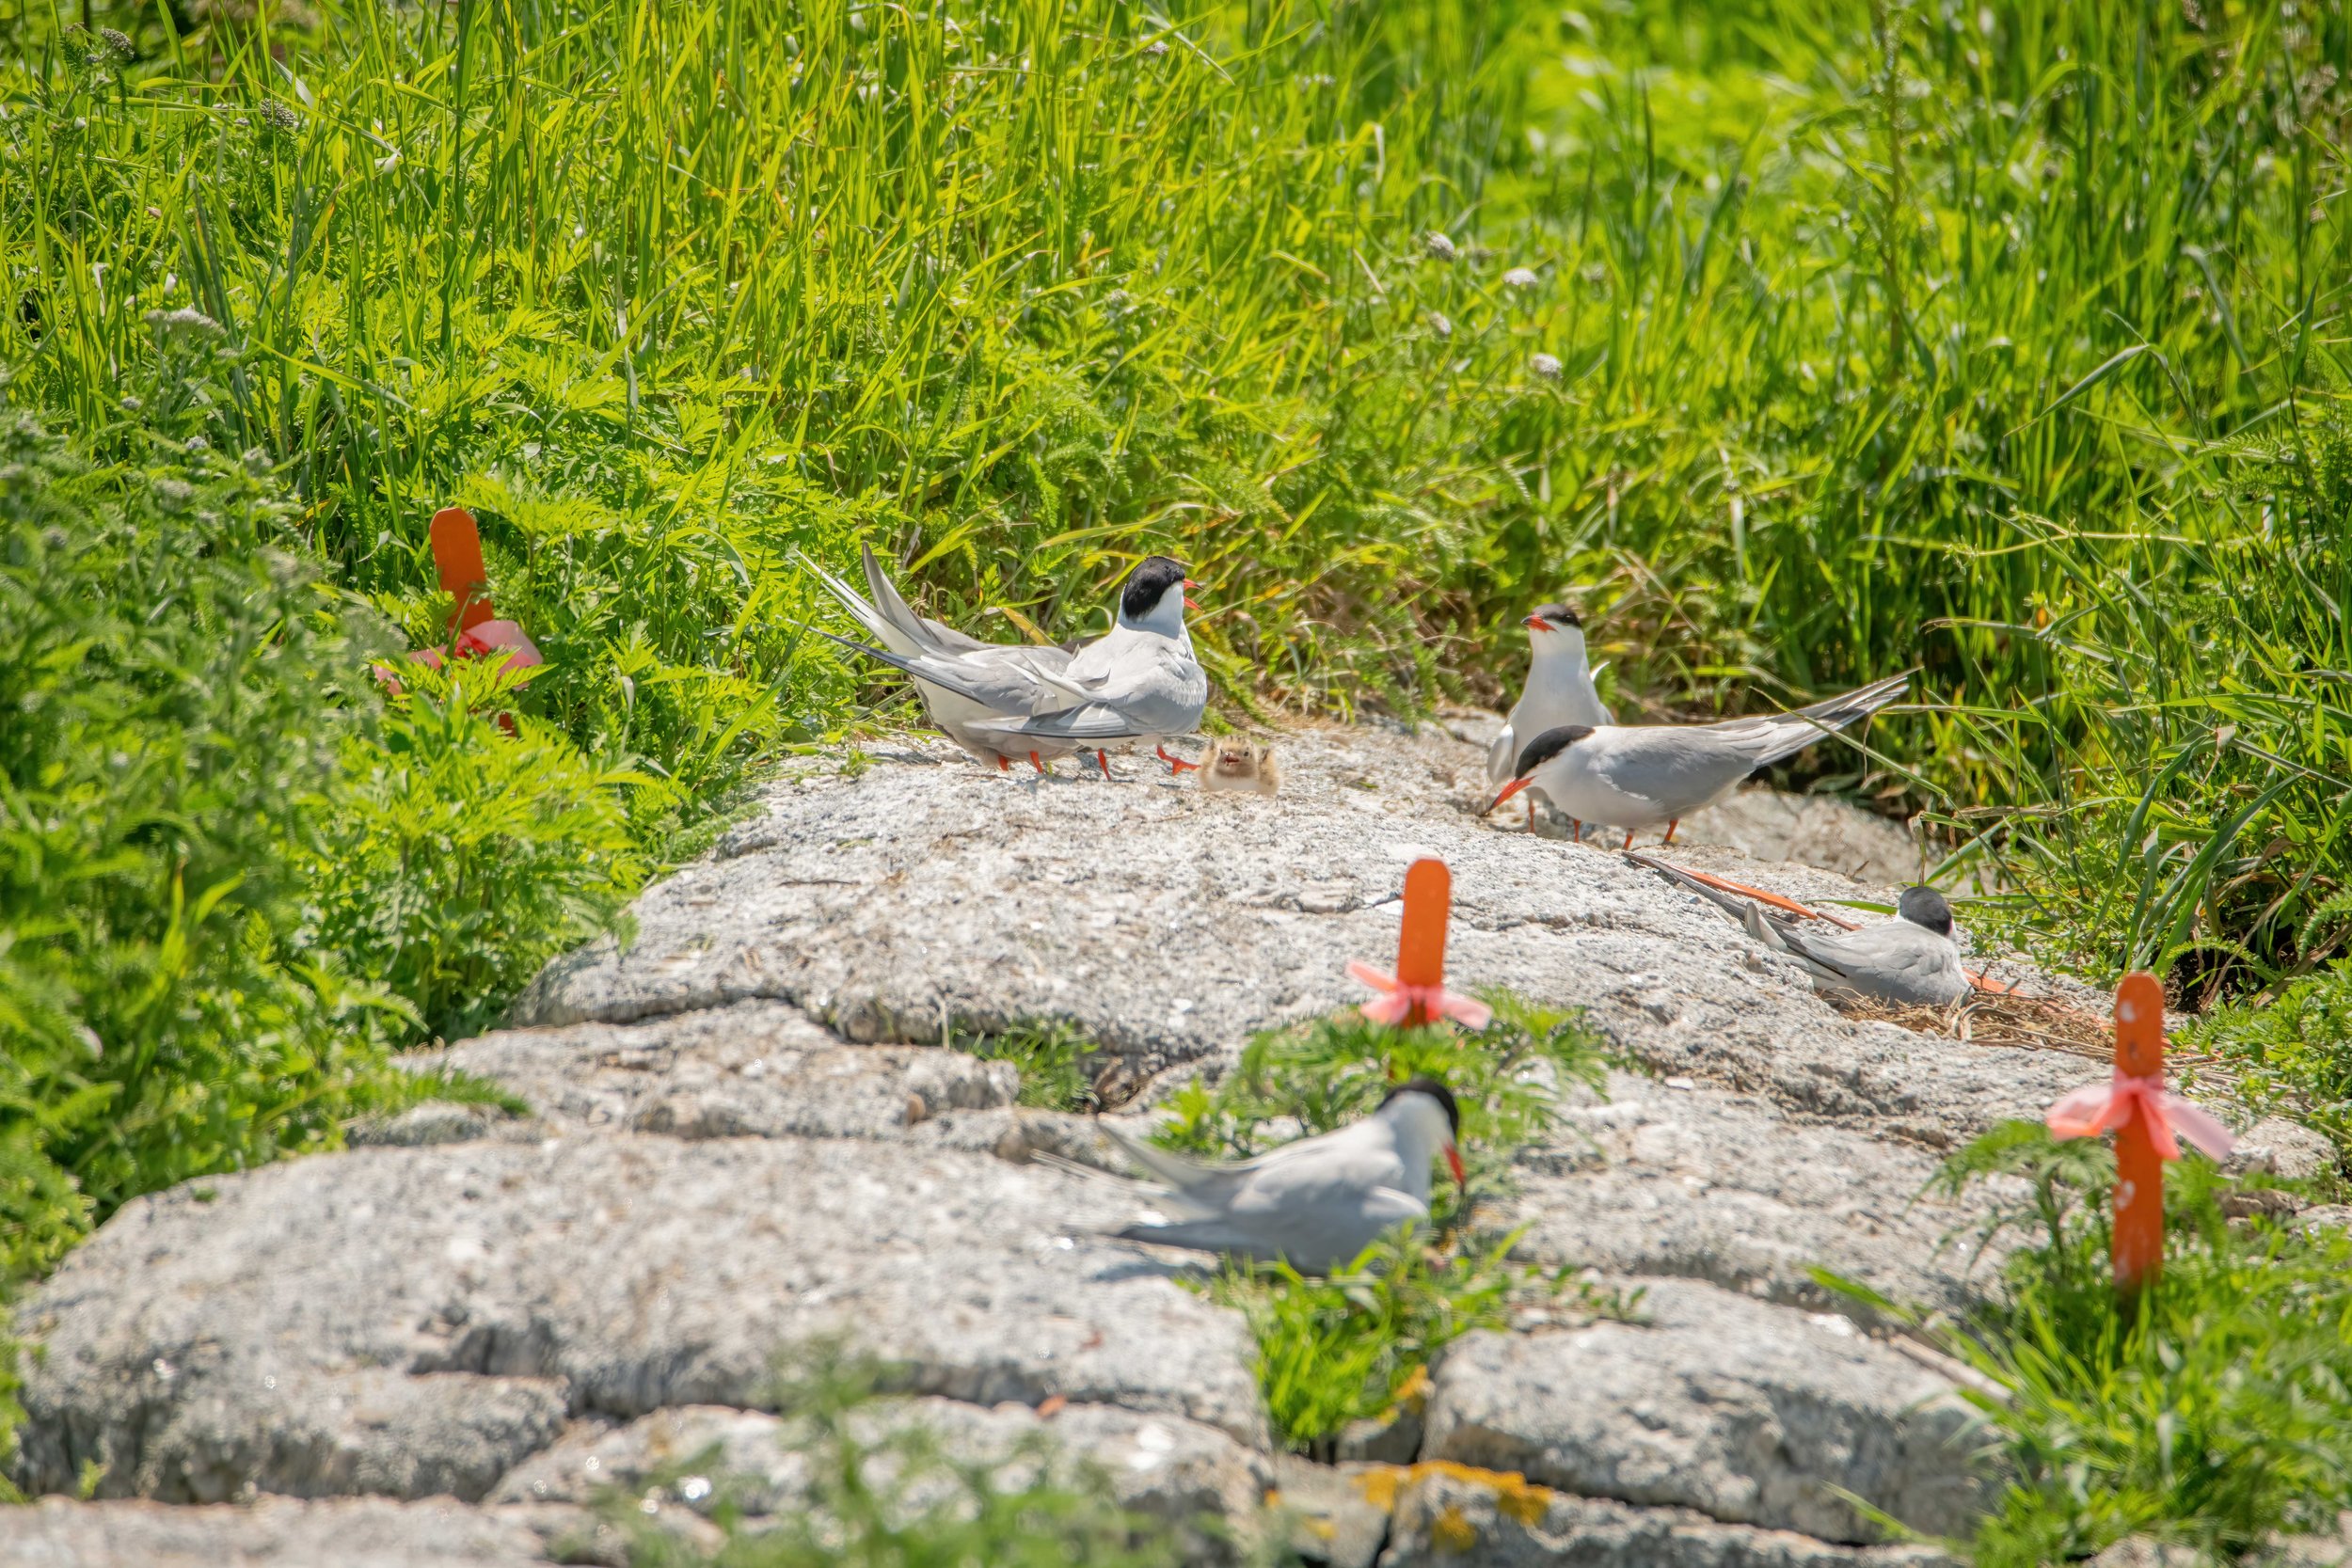 Nesting Common Terns